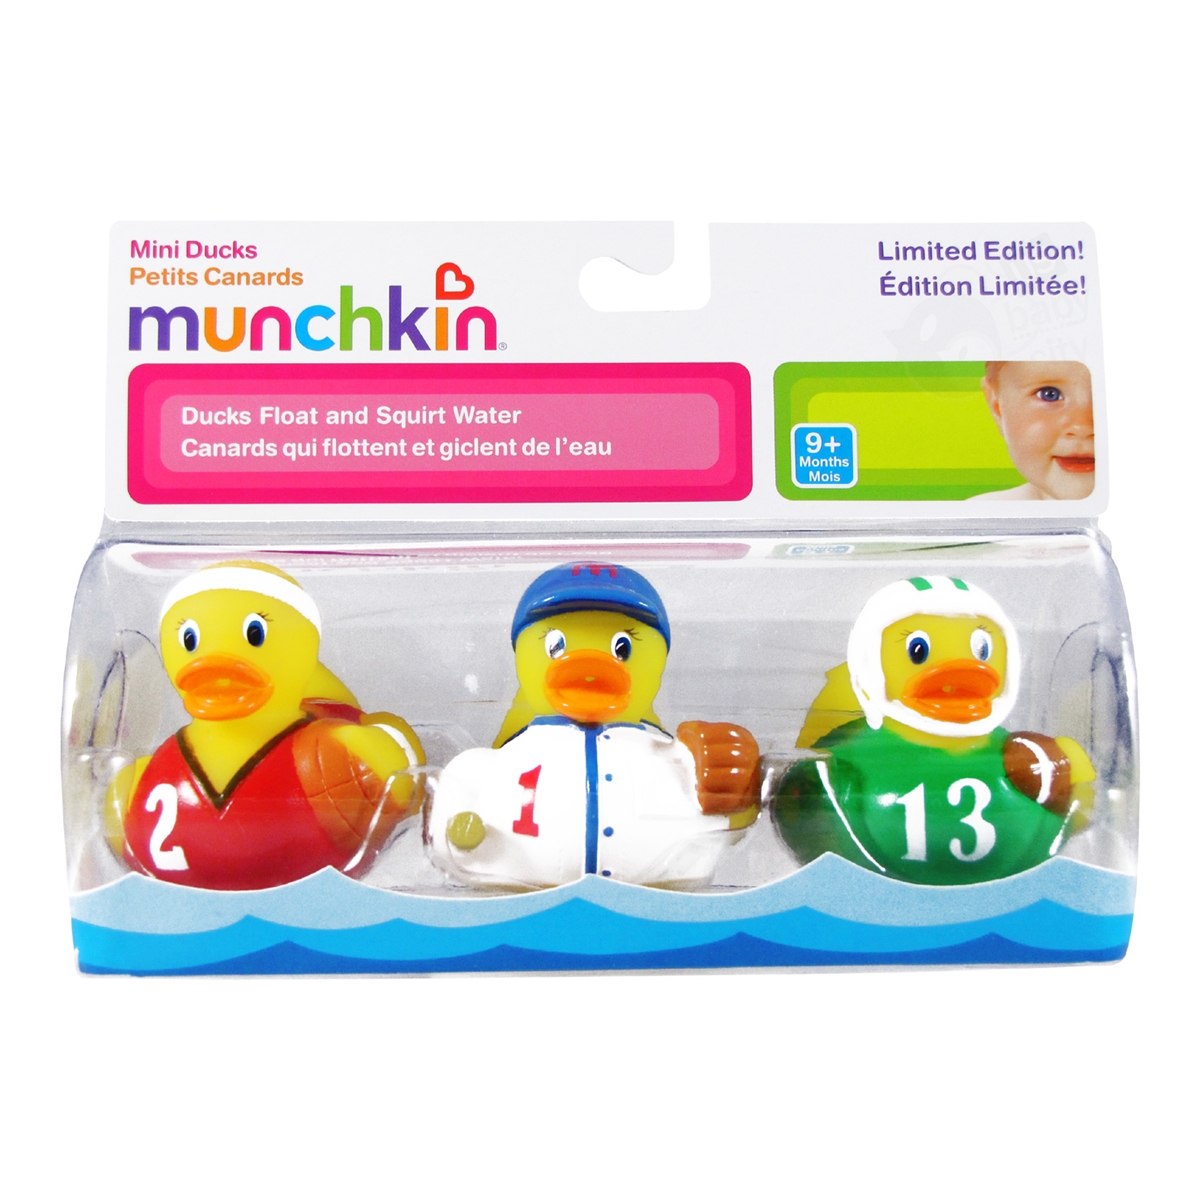 Sports Mini Ducks - 3 pack (Munchkin)